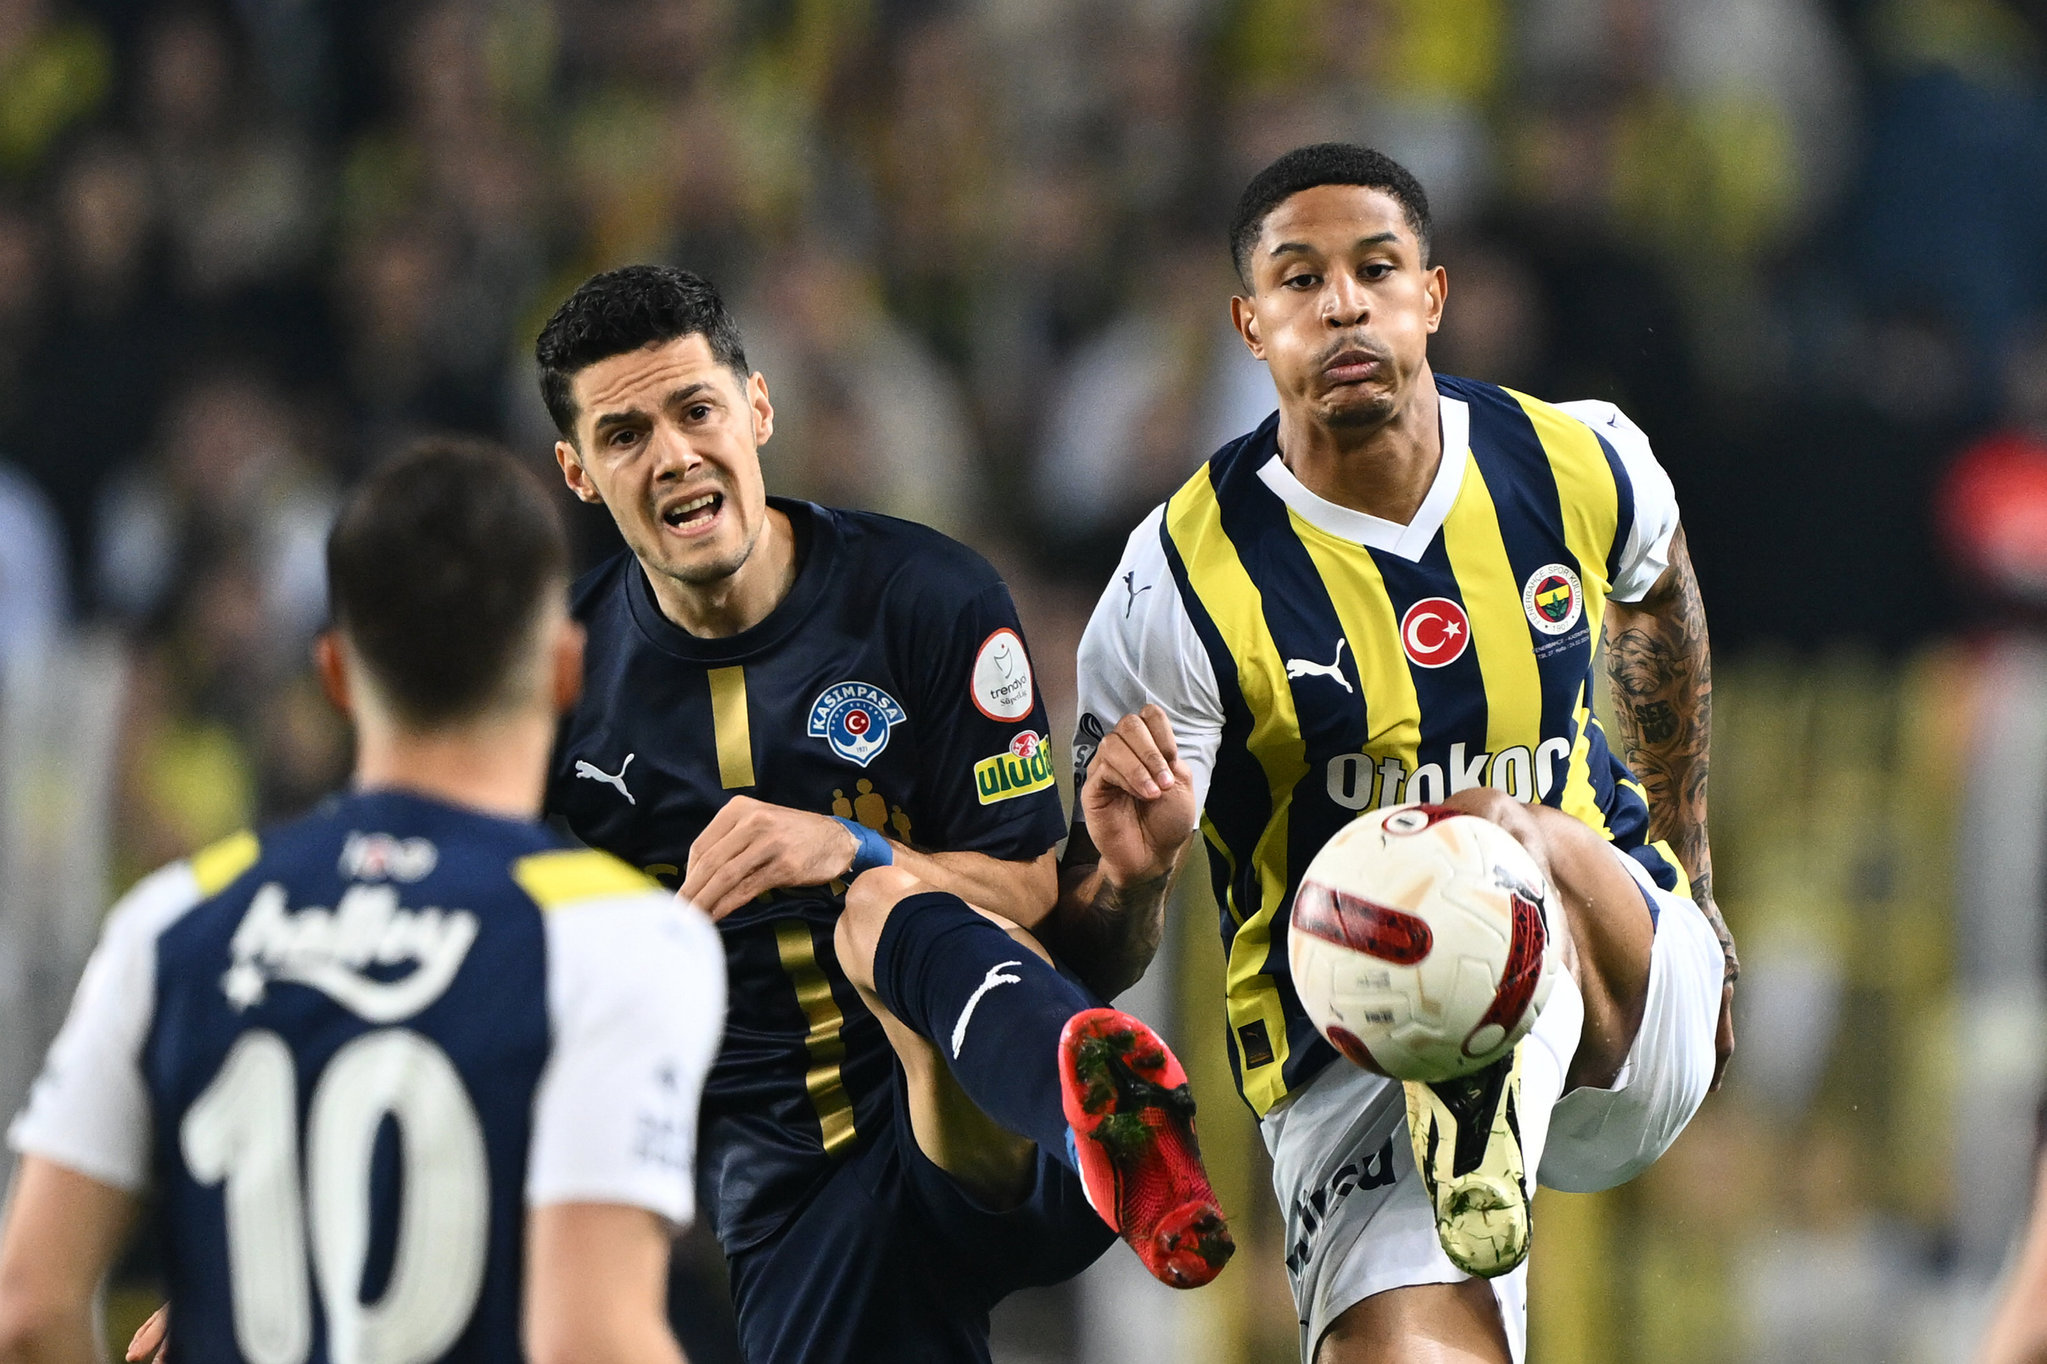 TRANSFER HABERİ: Fenerbahçe’den tarihi satış! Bonservis ücreti 20 milyon Euro